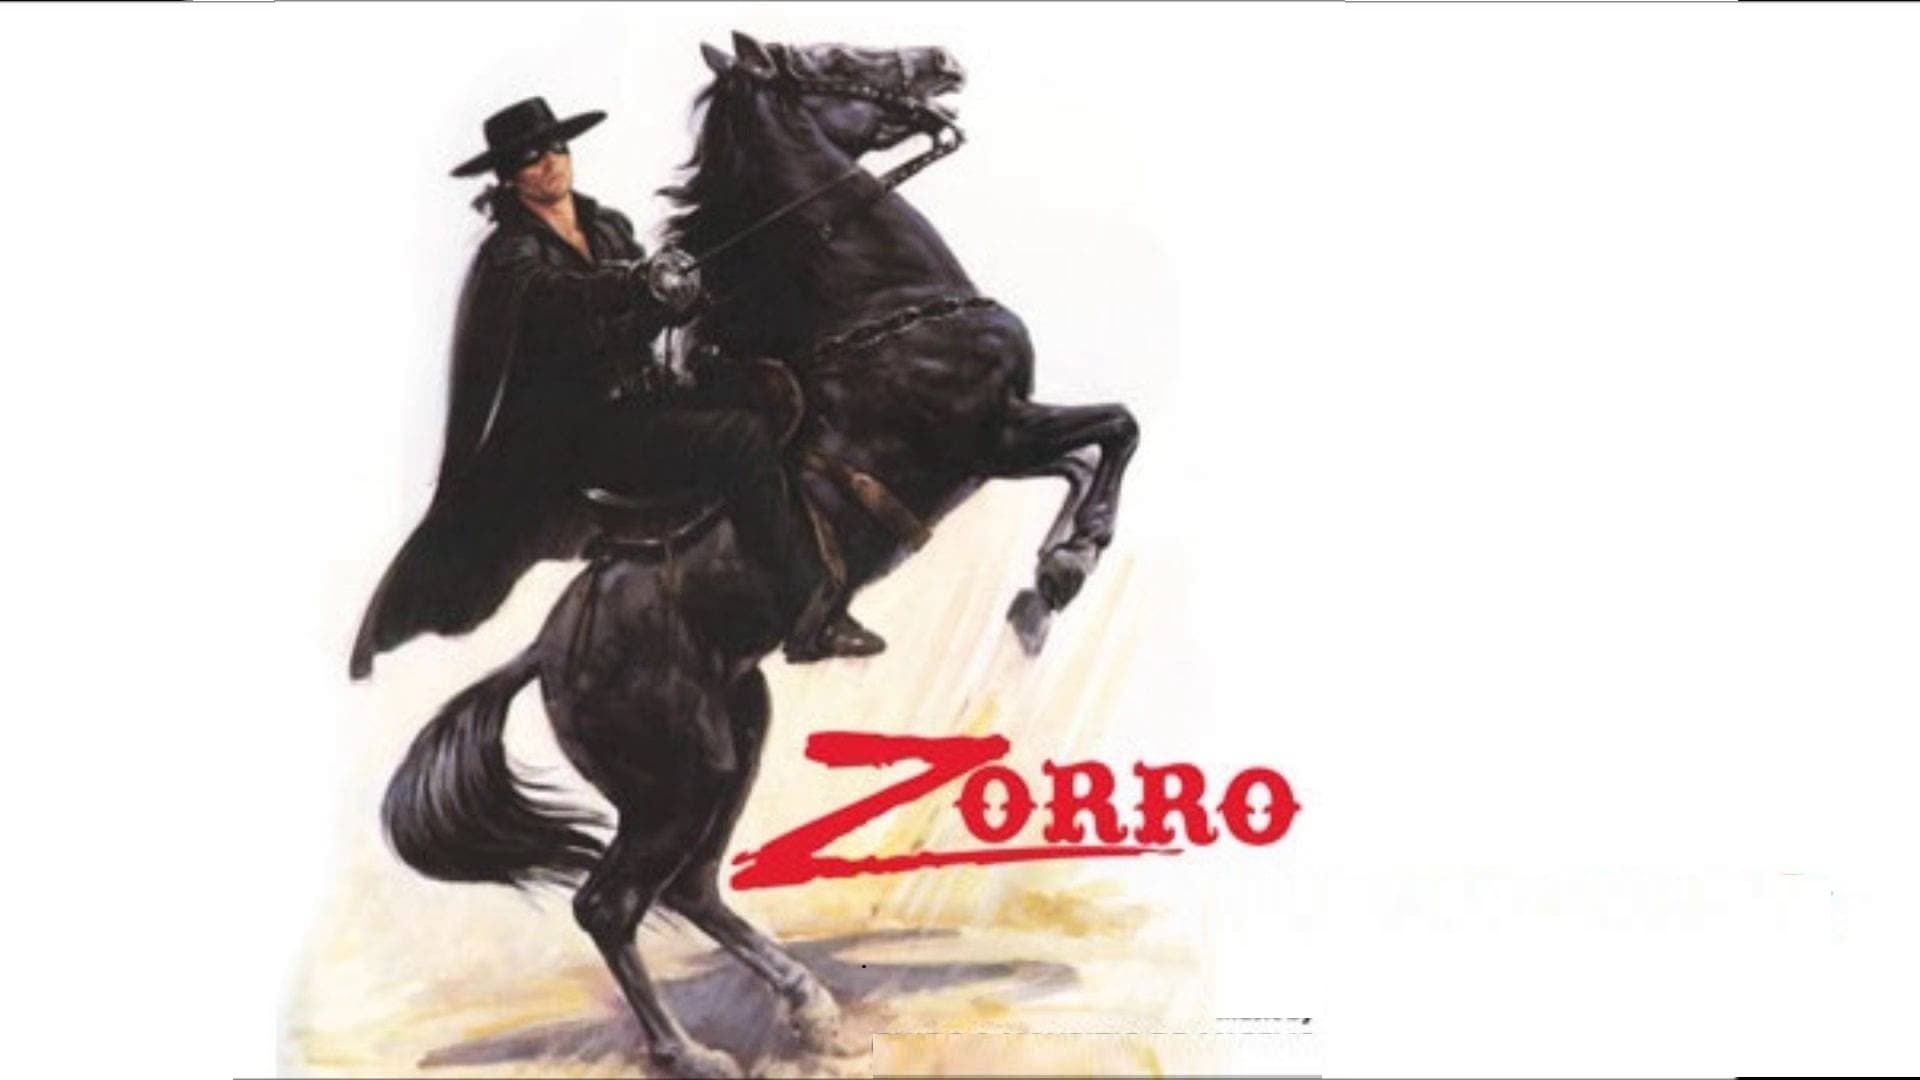 The Mark of Zorro background